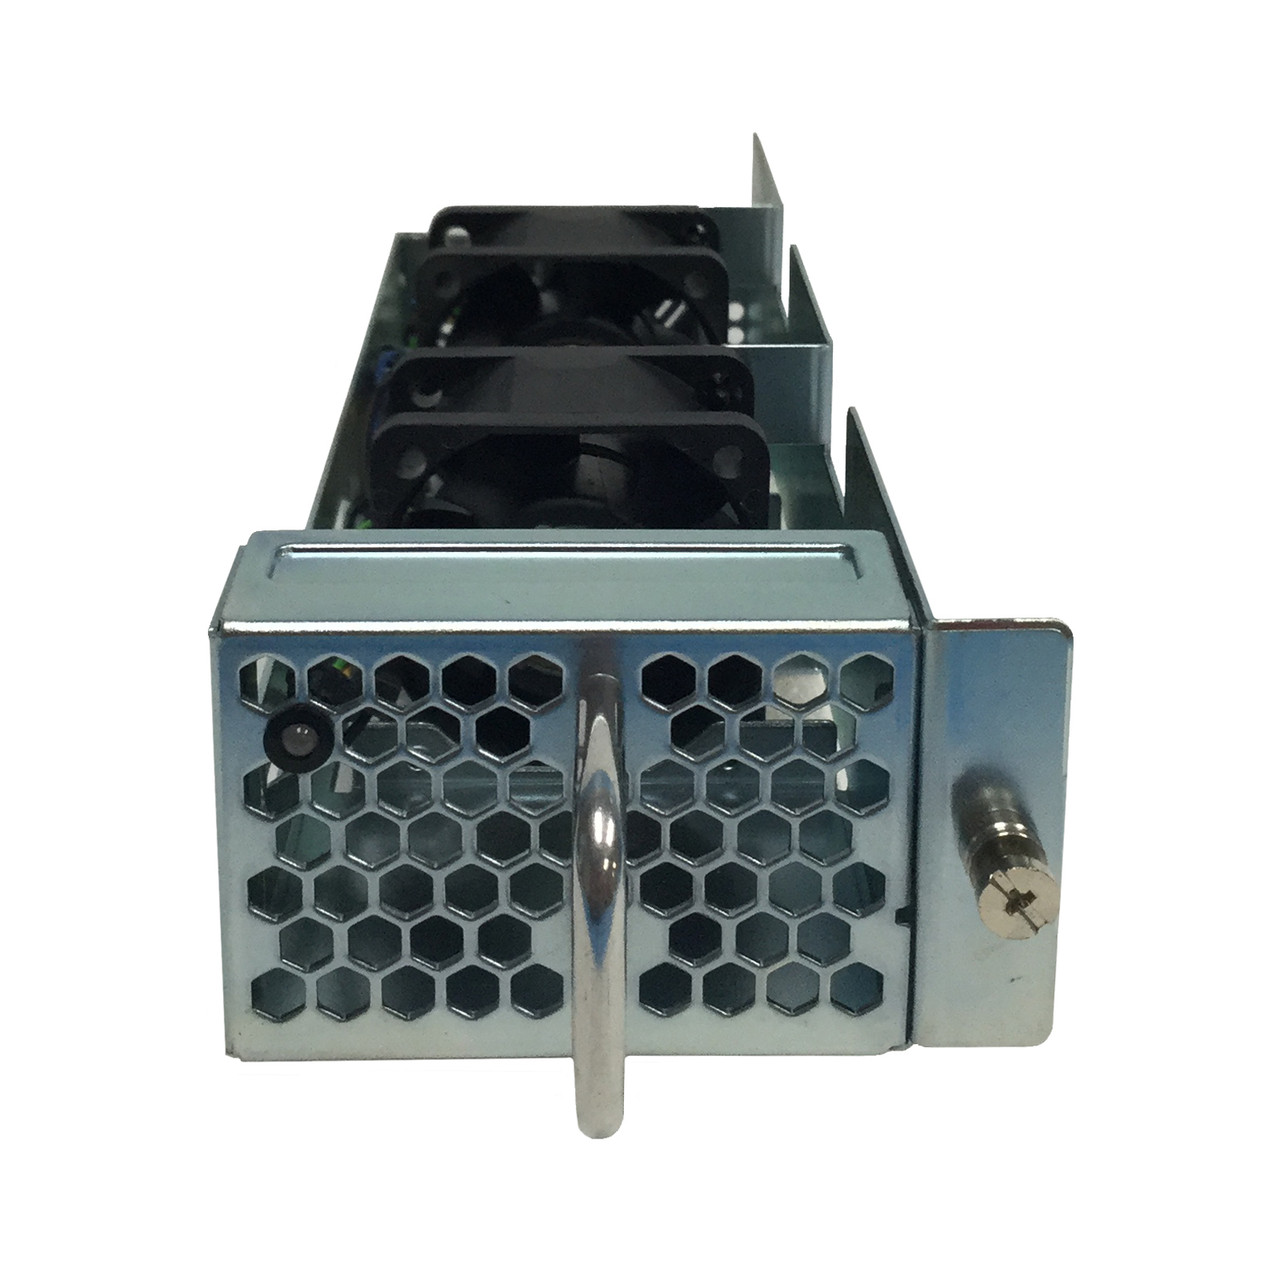 HP 411851-001 Storageworks 4/32 Switch Fan Assembly 